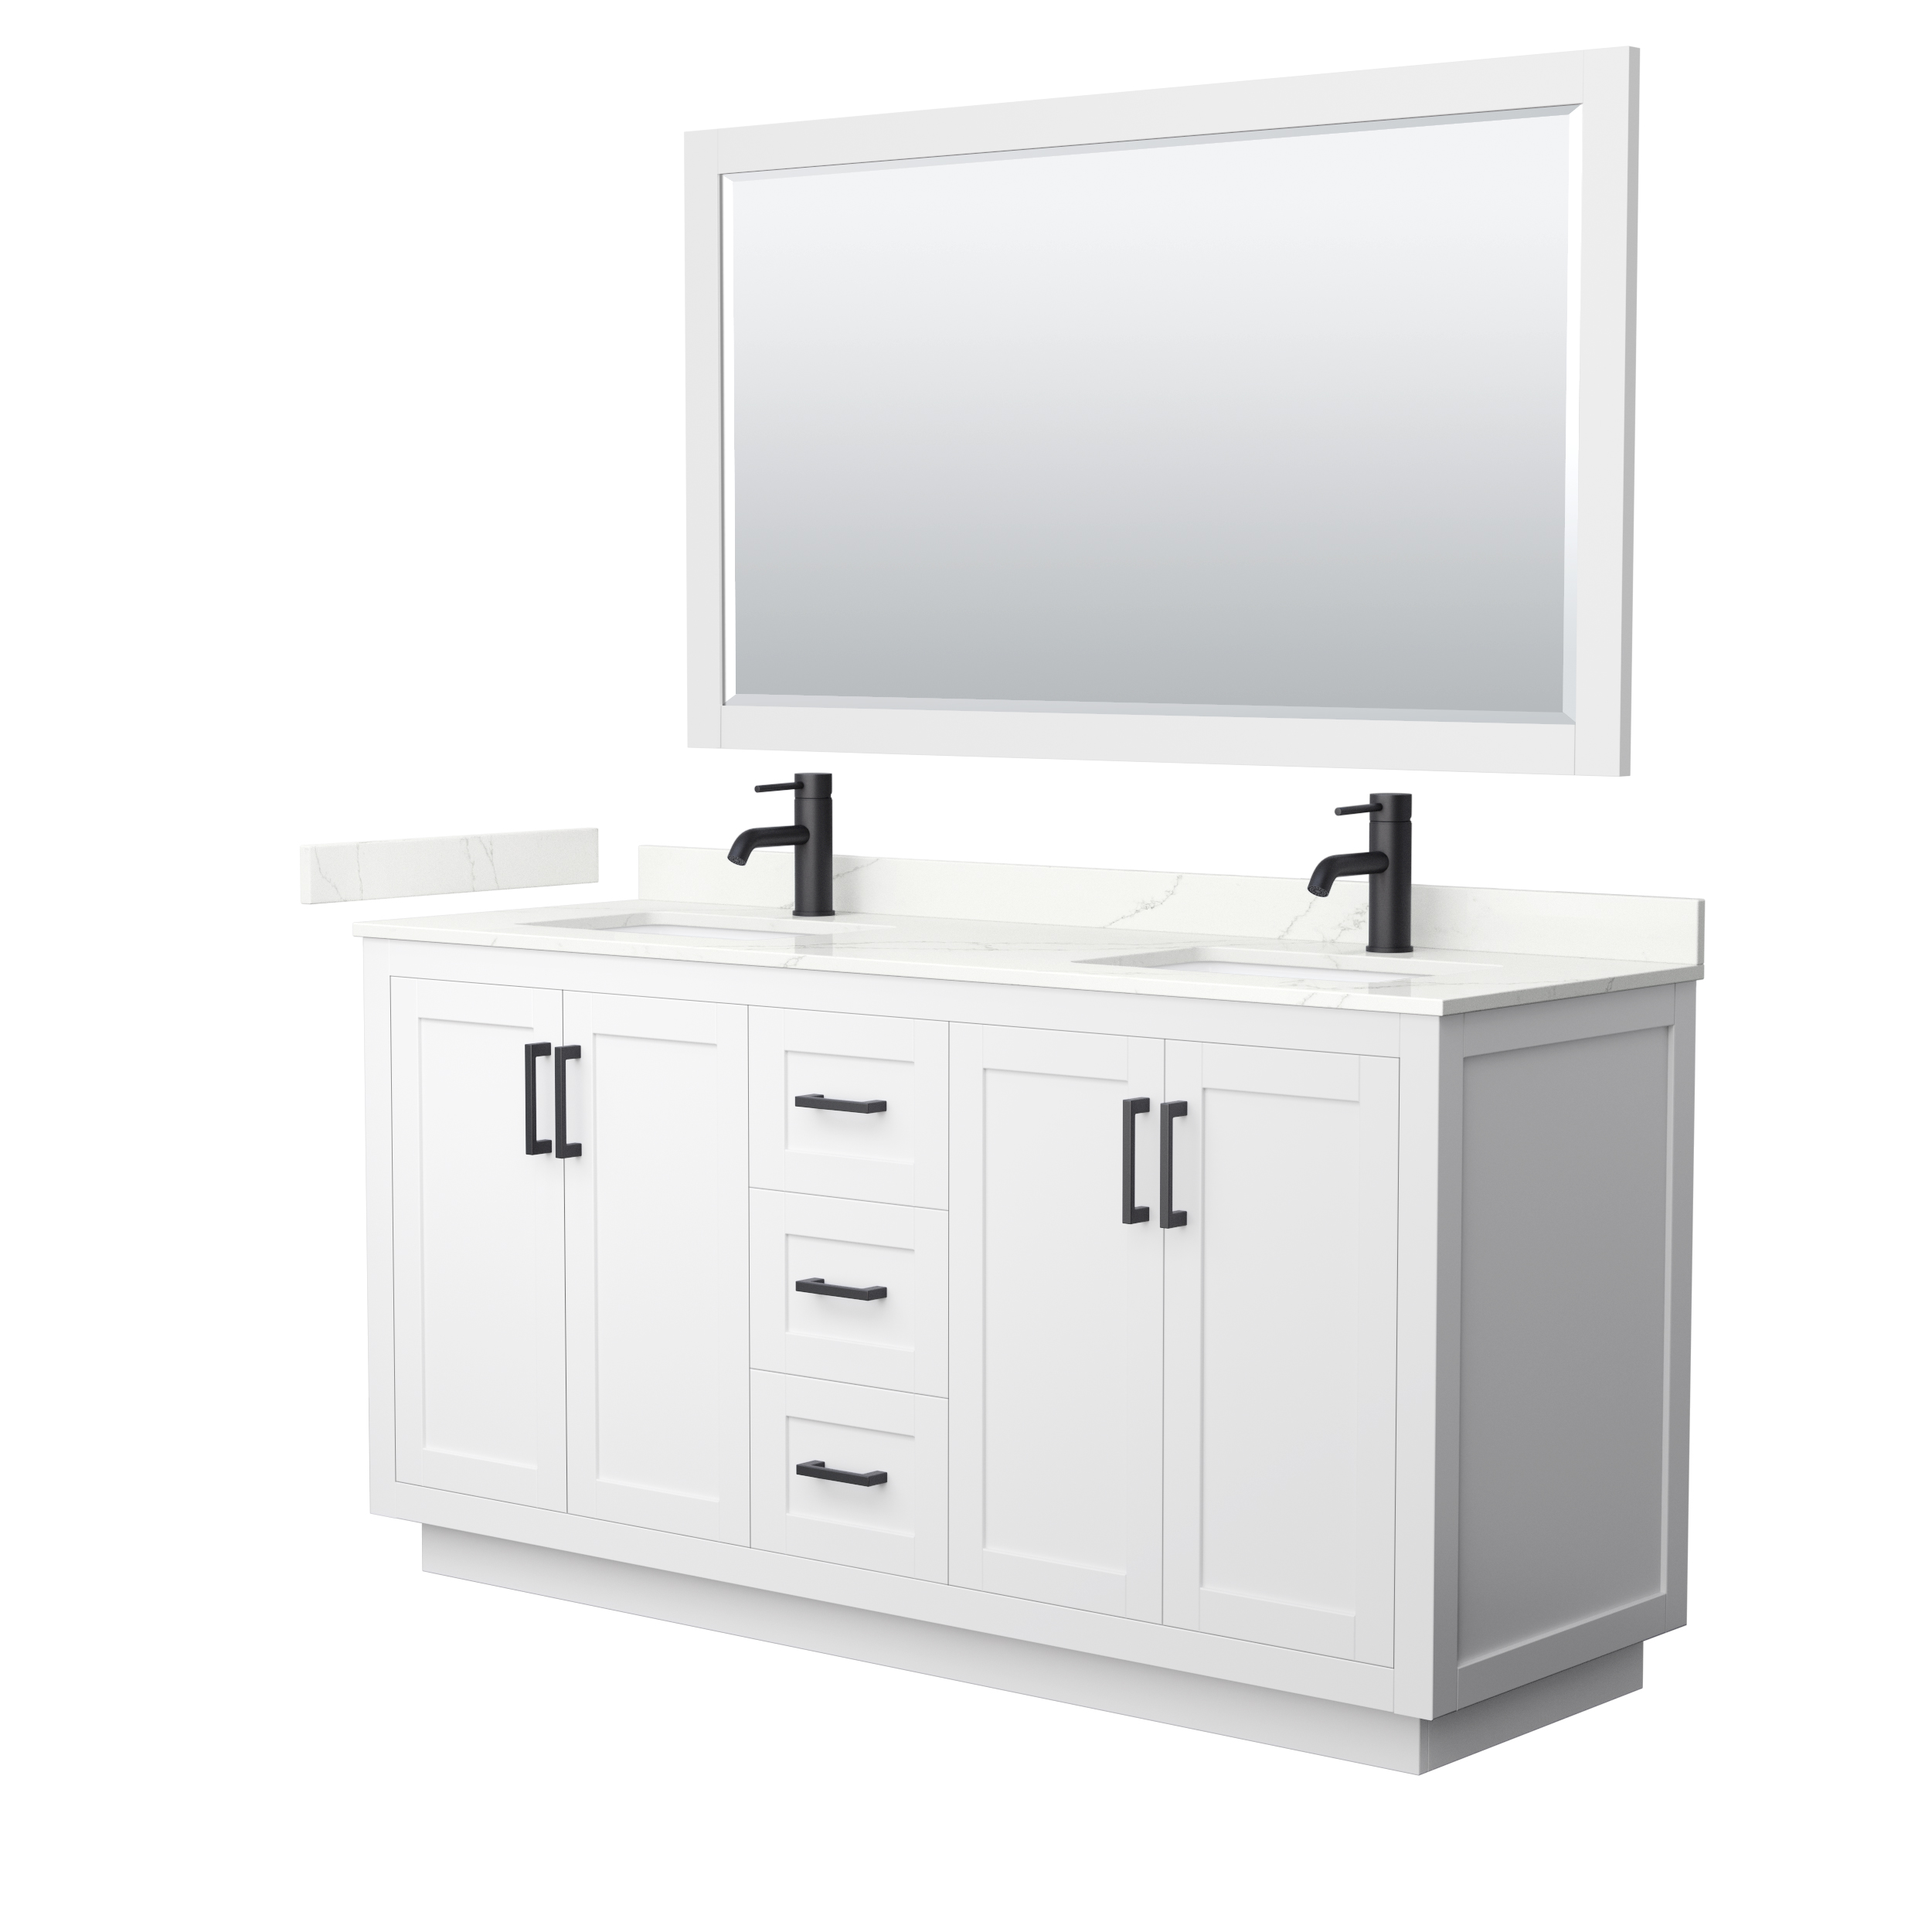 Miranda 66" Double Vanity with optional Quartz or Carrara Marble Counter - White WC-2929-66-DBL-VAN-WHT__